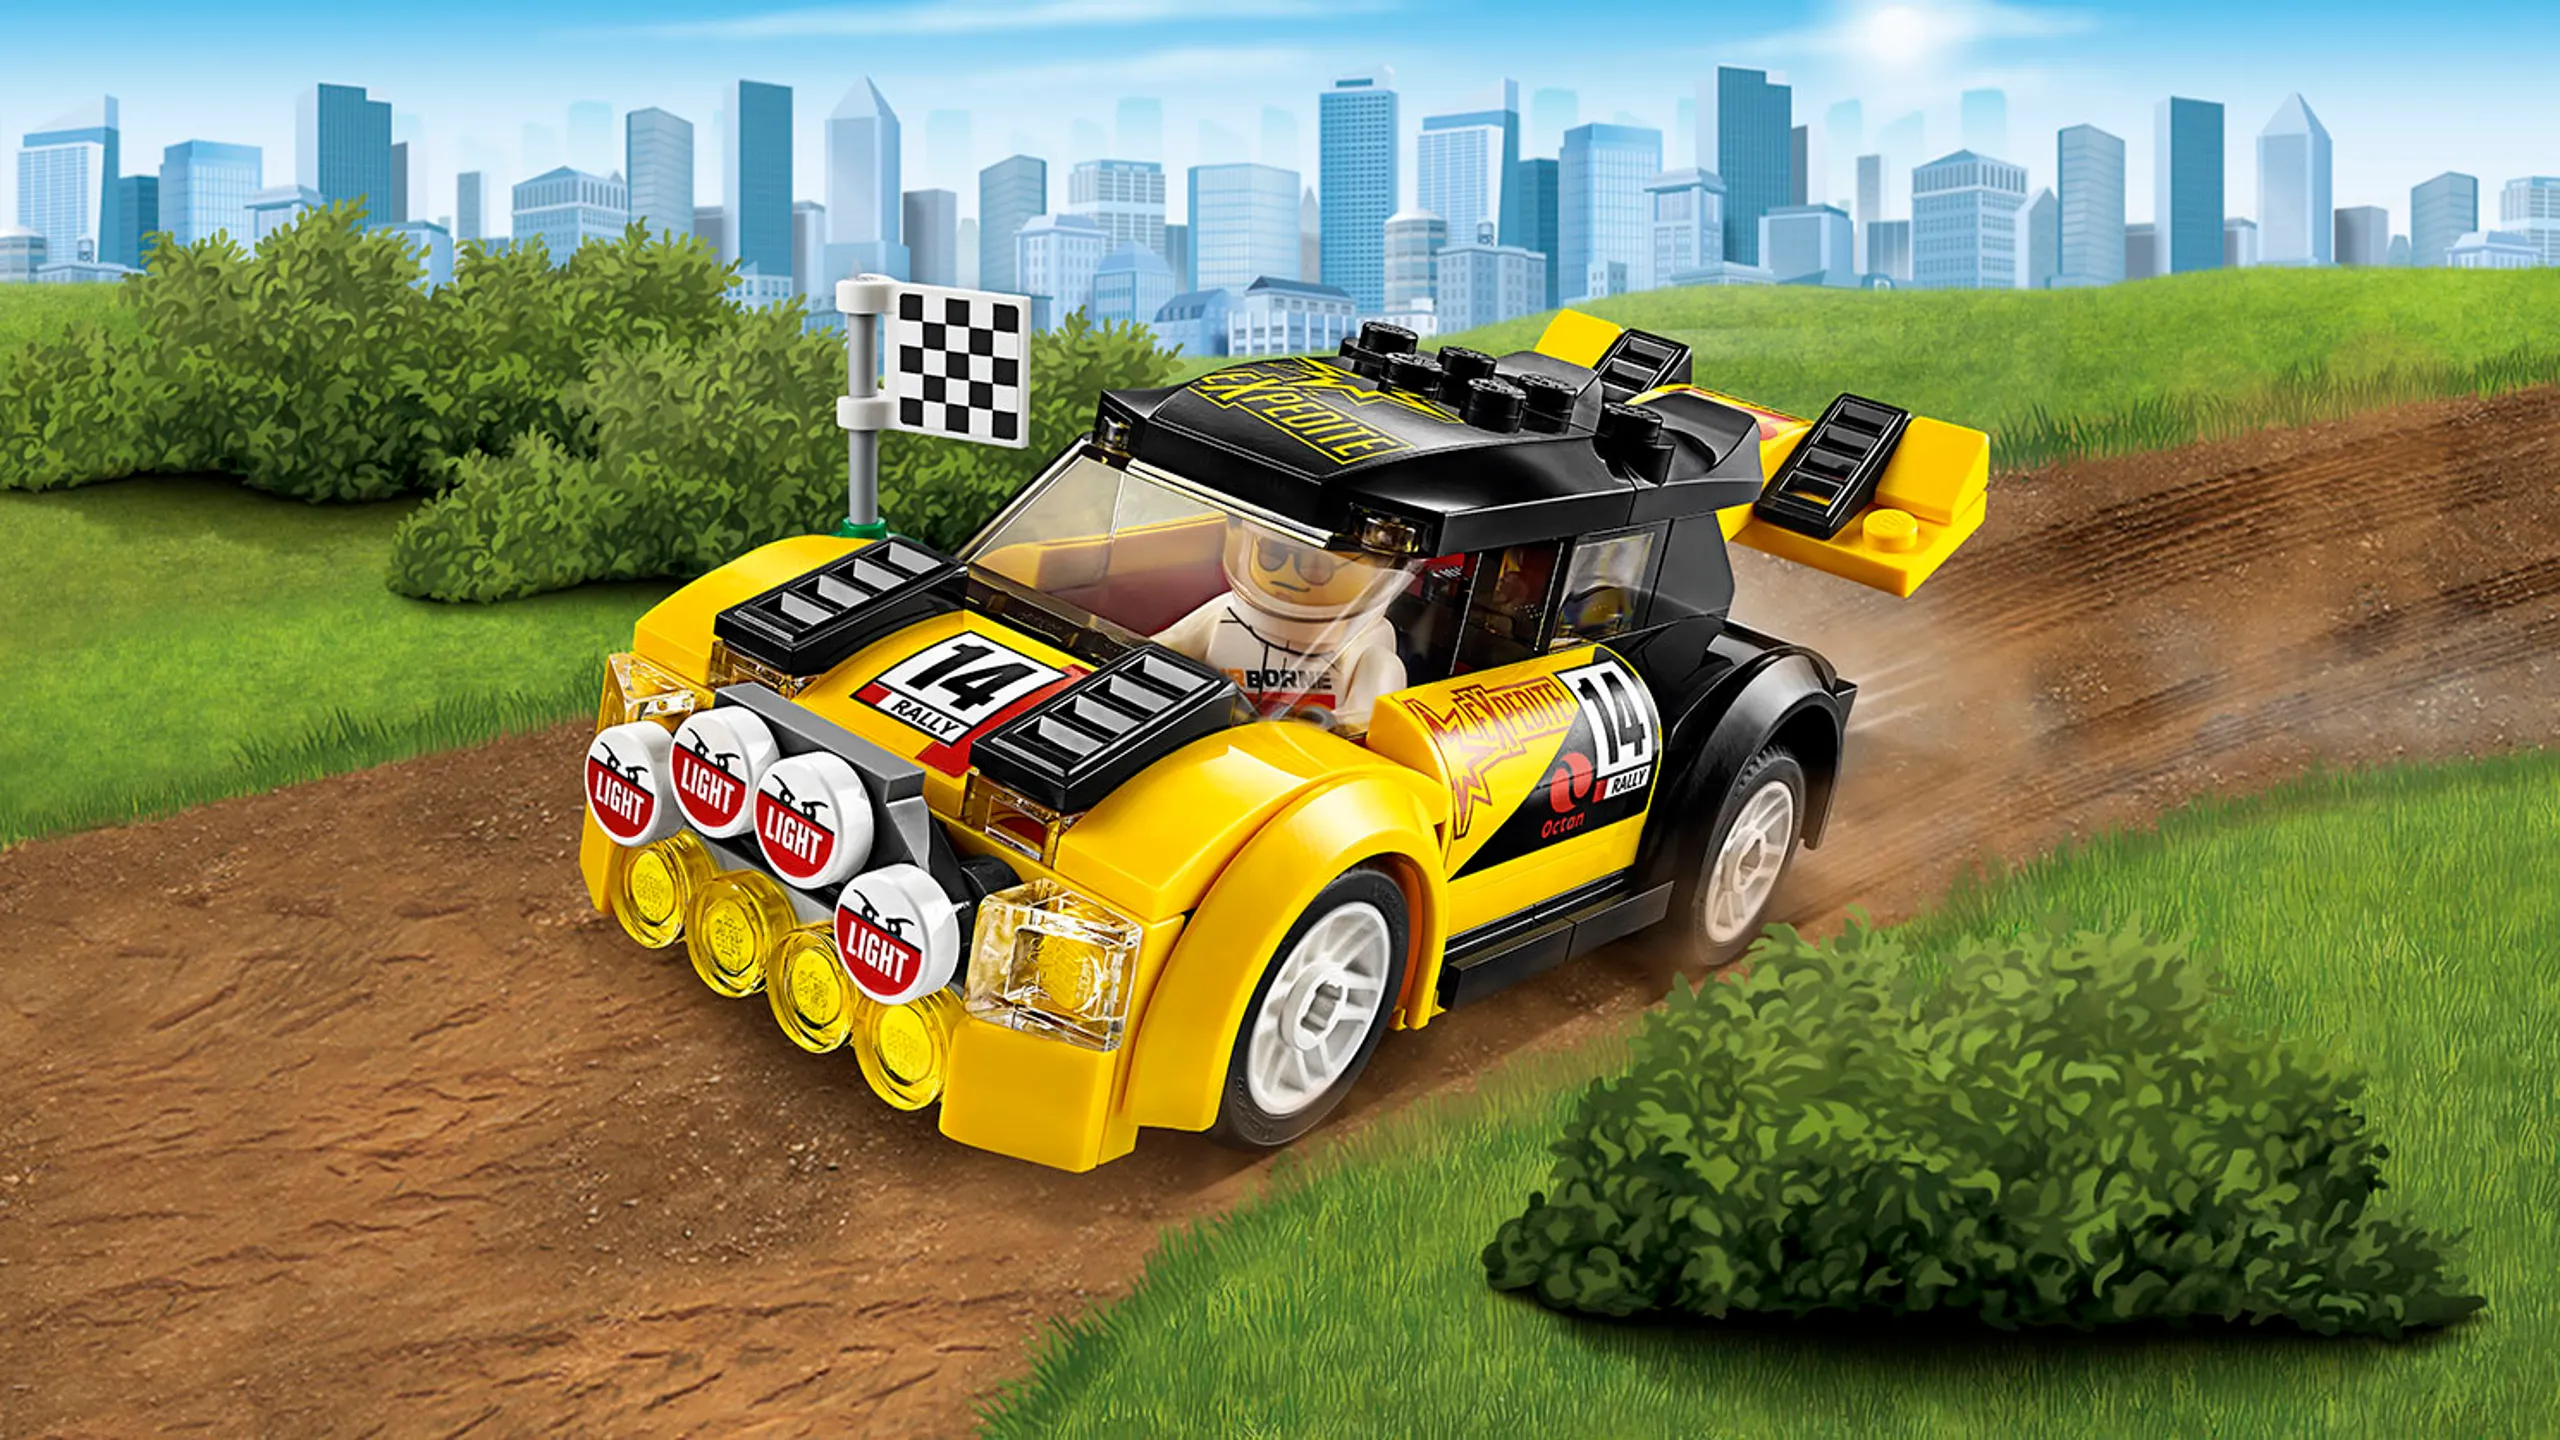 LEGO City Fantastiske fartøjer – Rallybil 60113